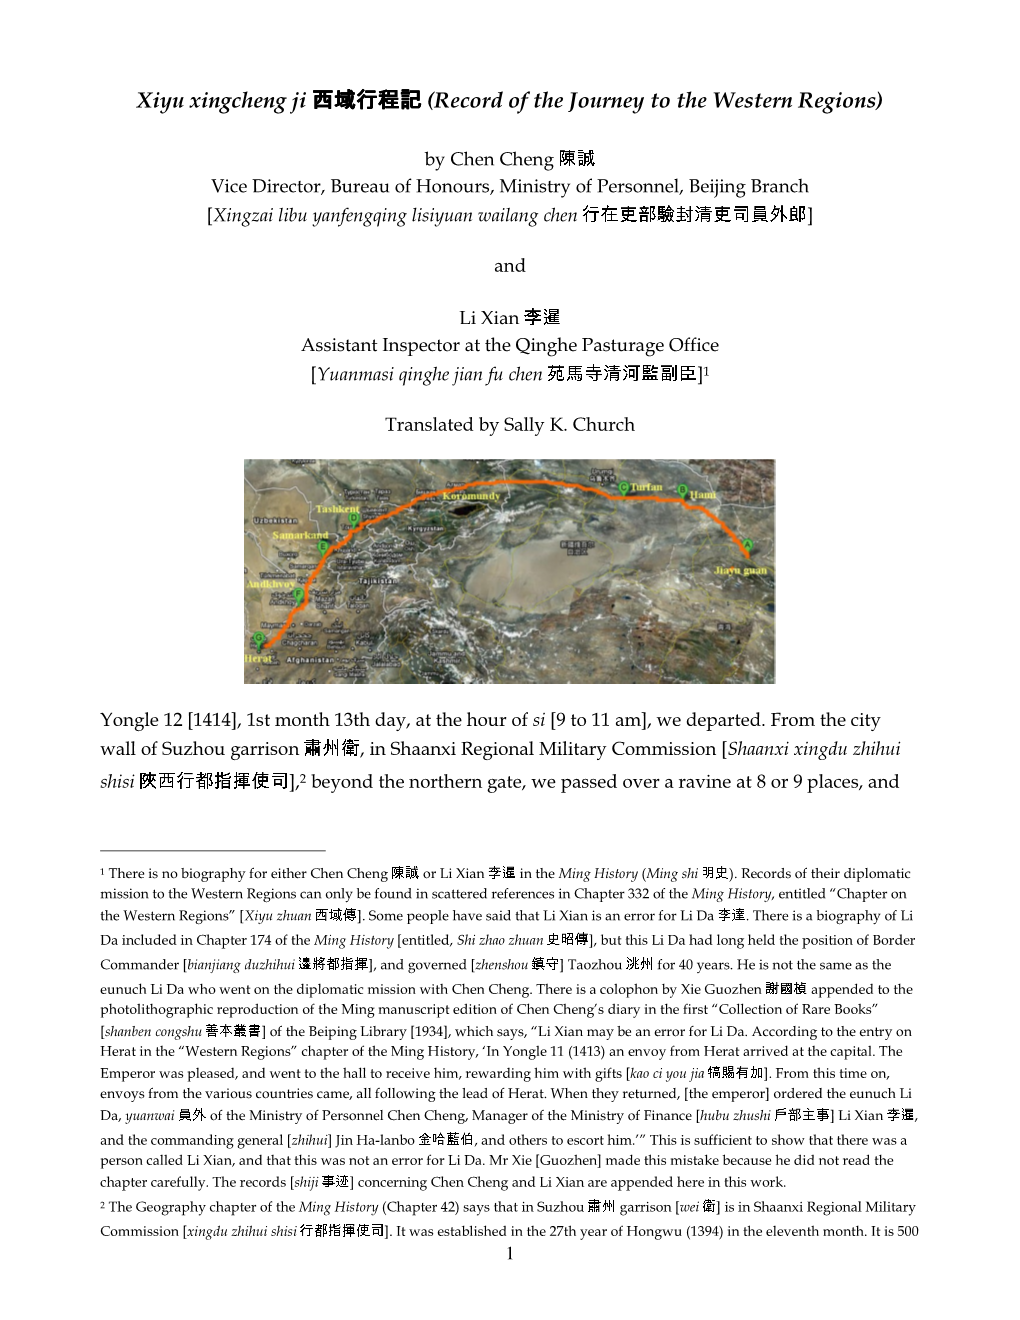 Xiyu Xingcheng Ji 西域行程記(Record of the Journey to the Western